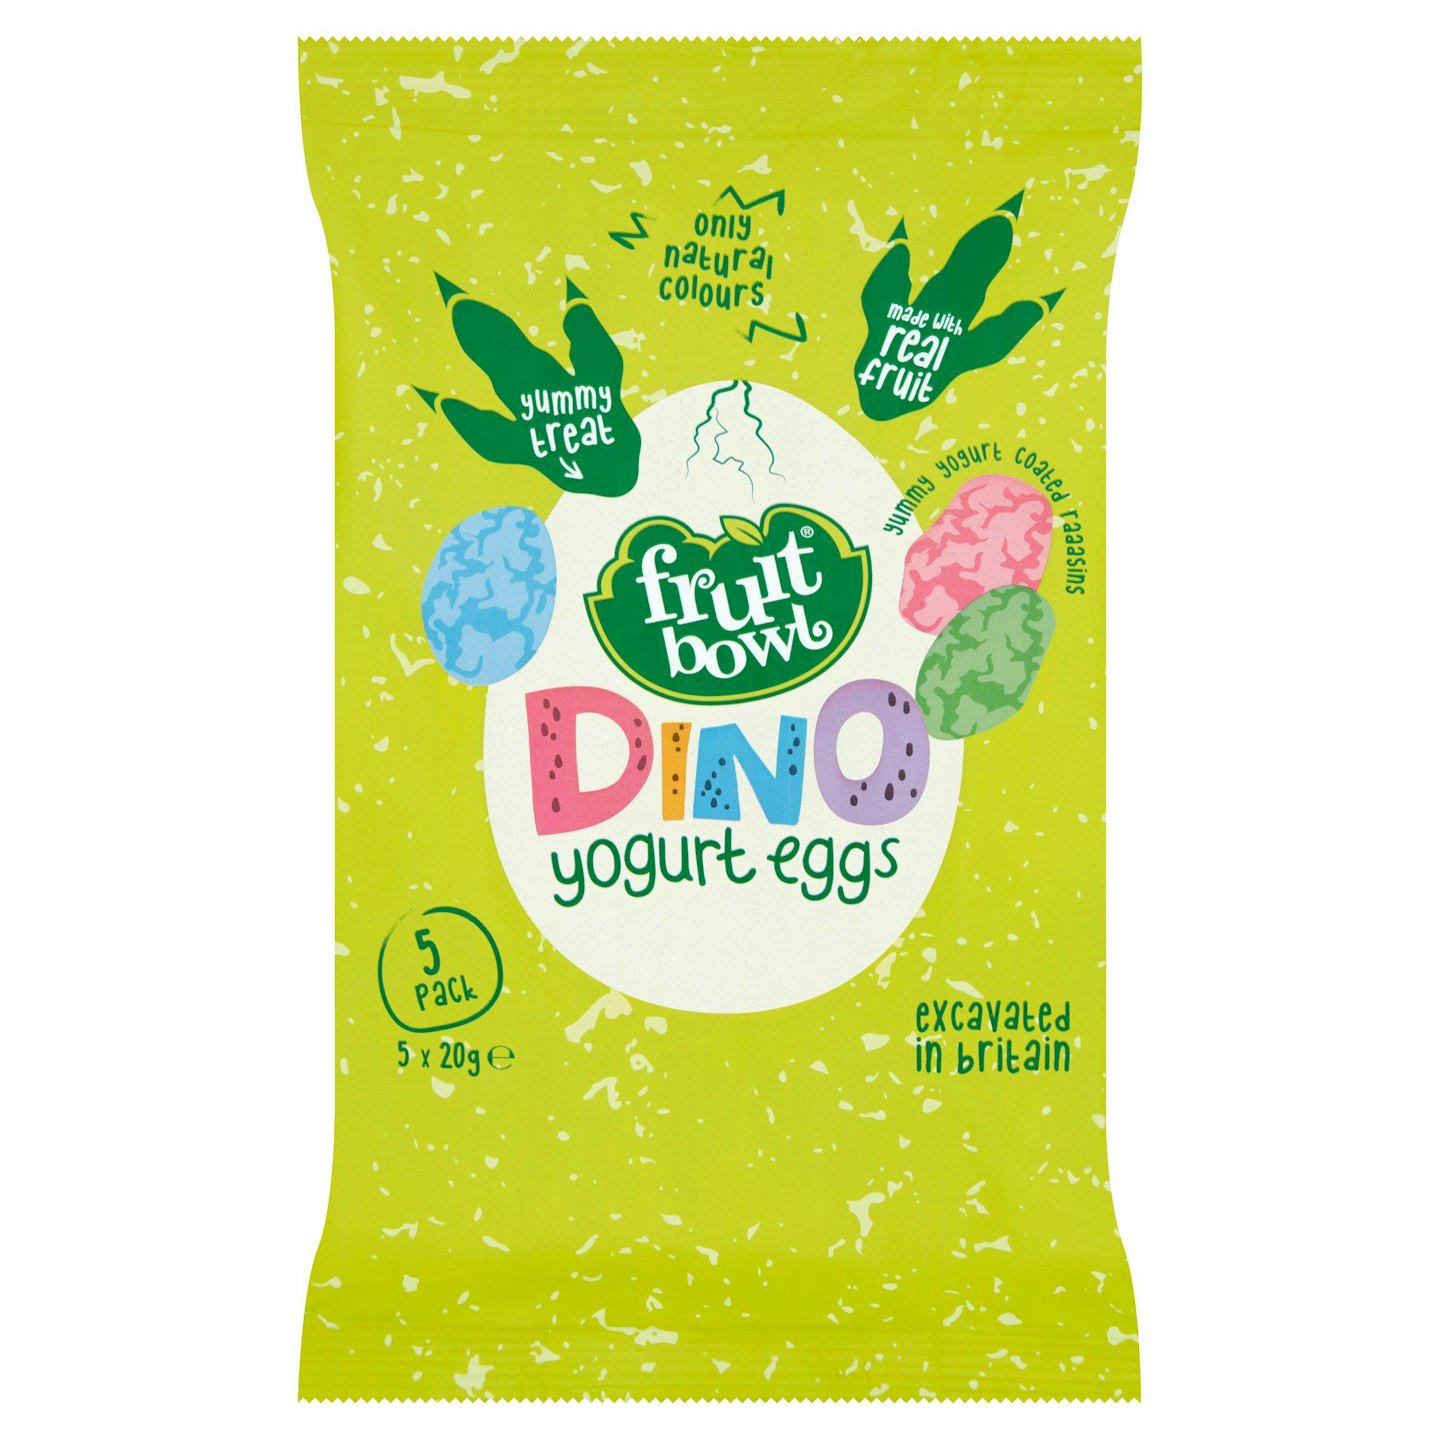 Fruit Bowl Dino Yogurt Eggs